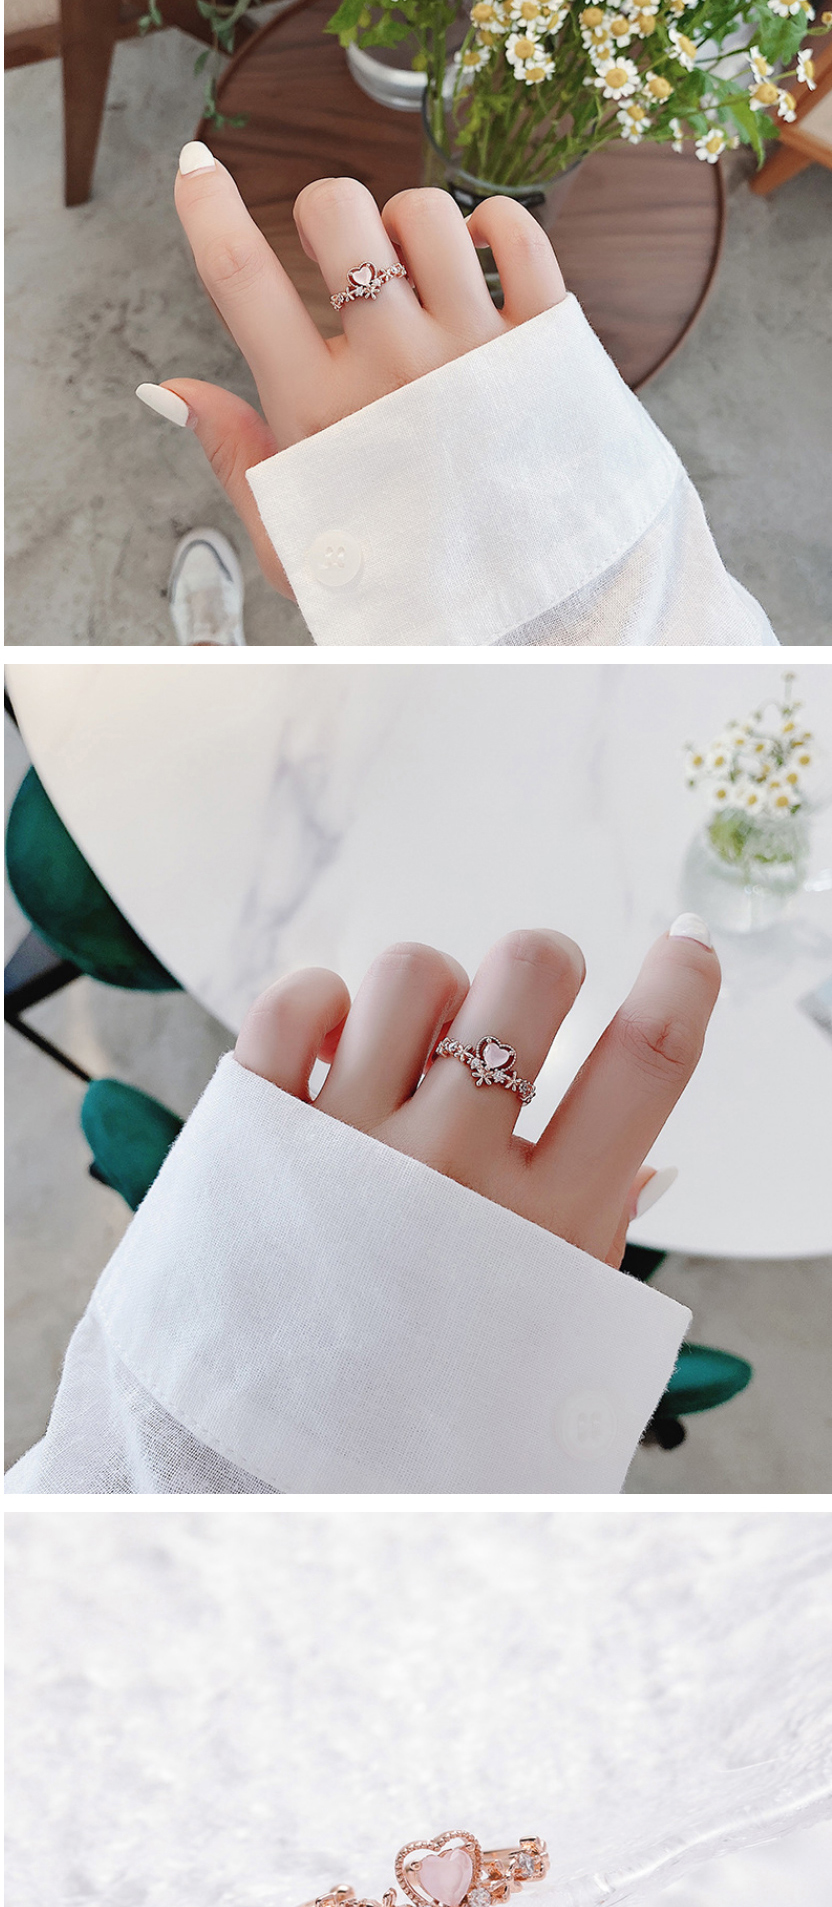 Fashion Silver Sparkling Diamond Zircon Flower Ring,Fashion Rings